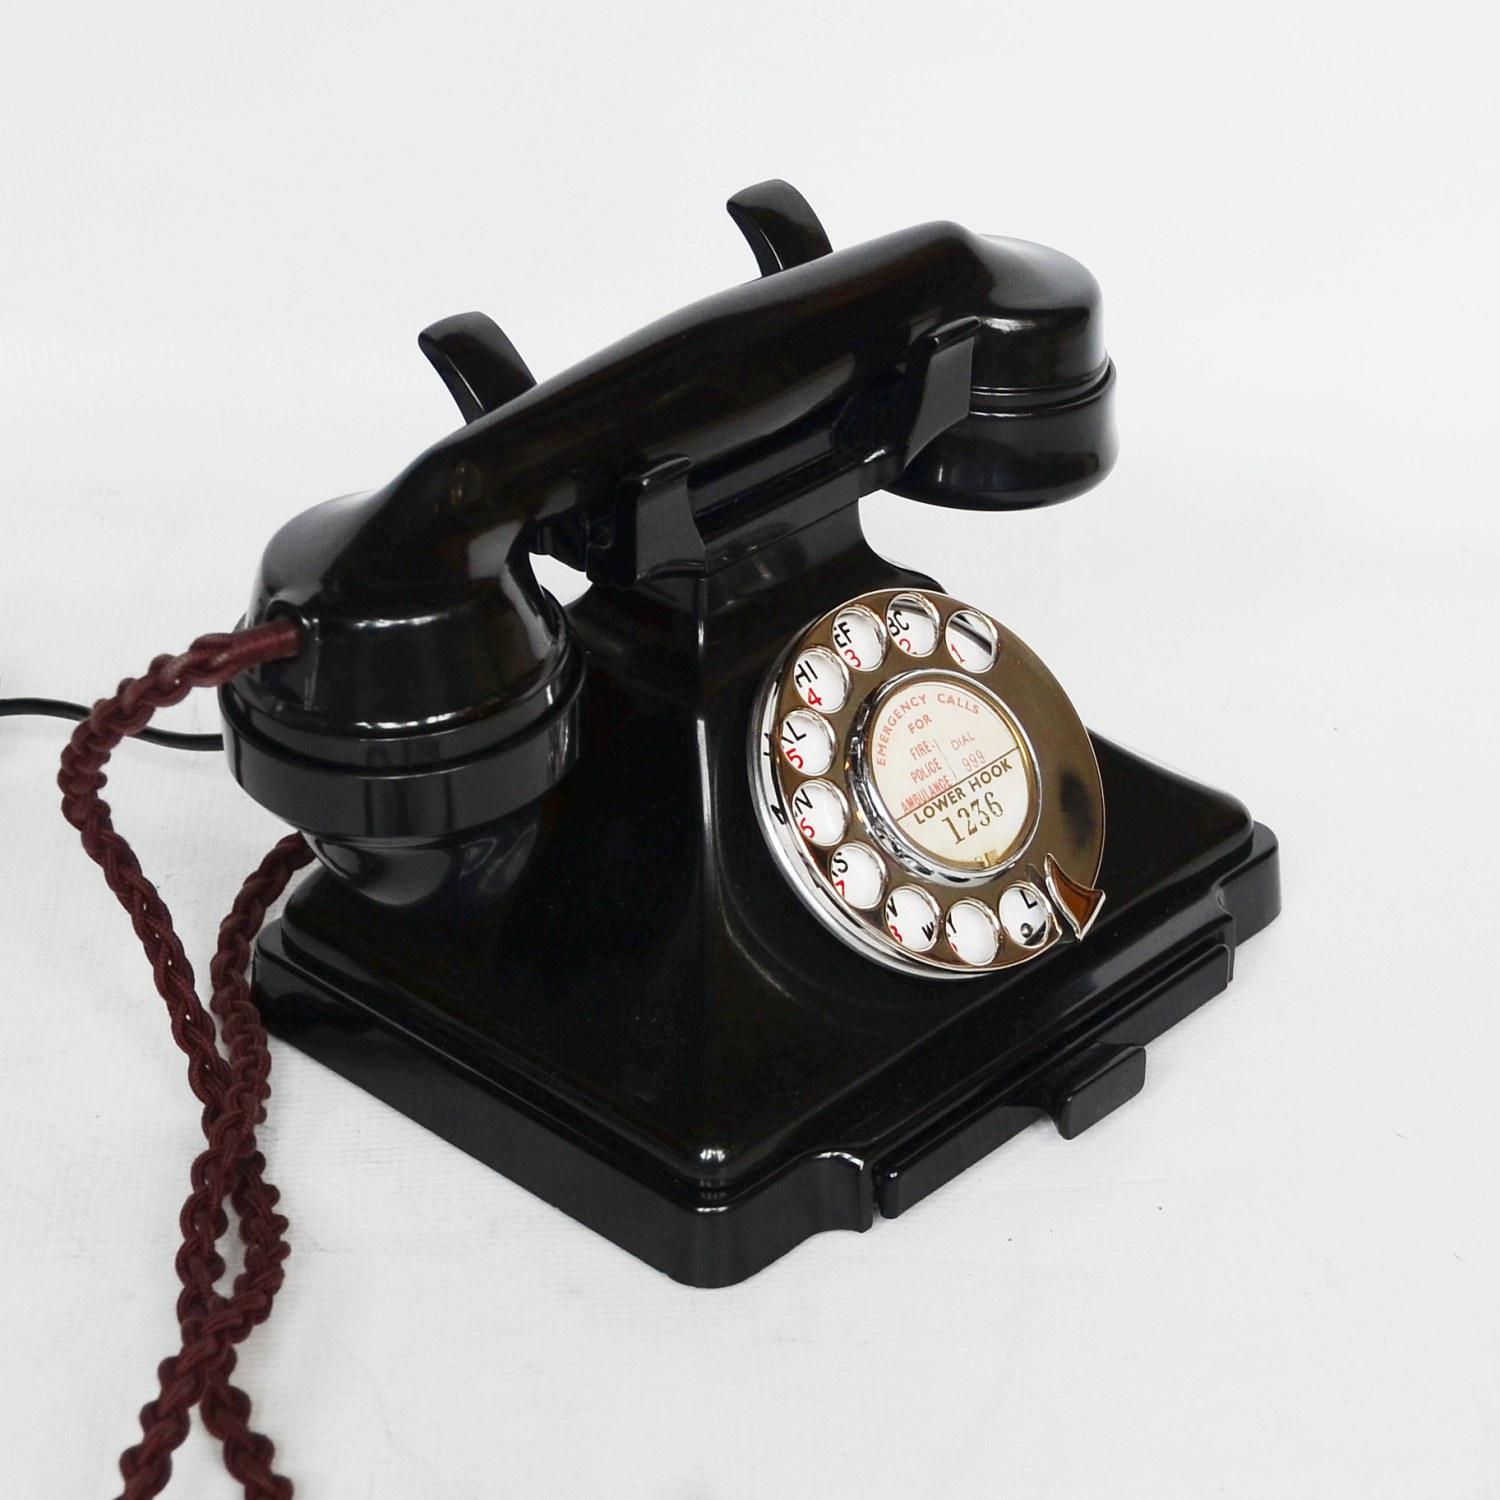 1945 phone